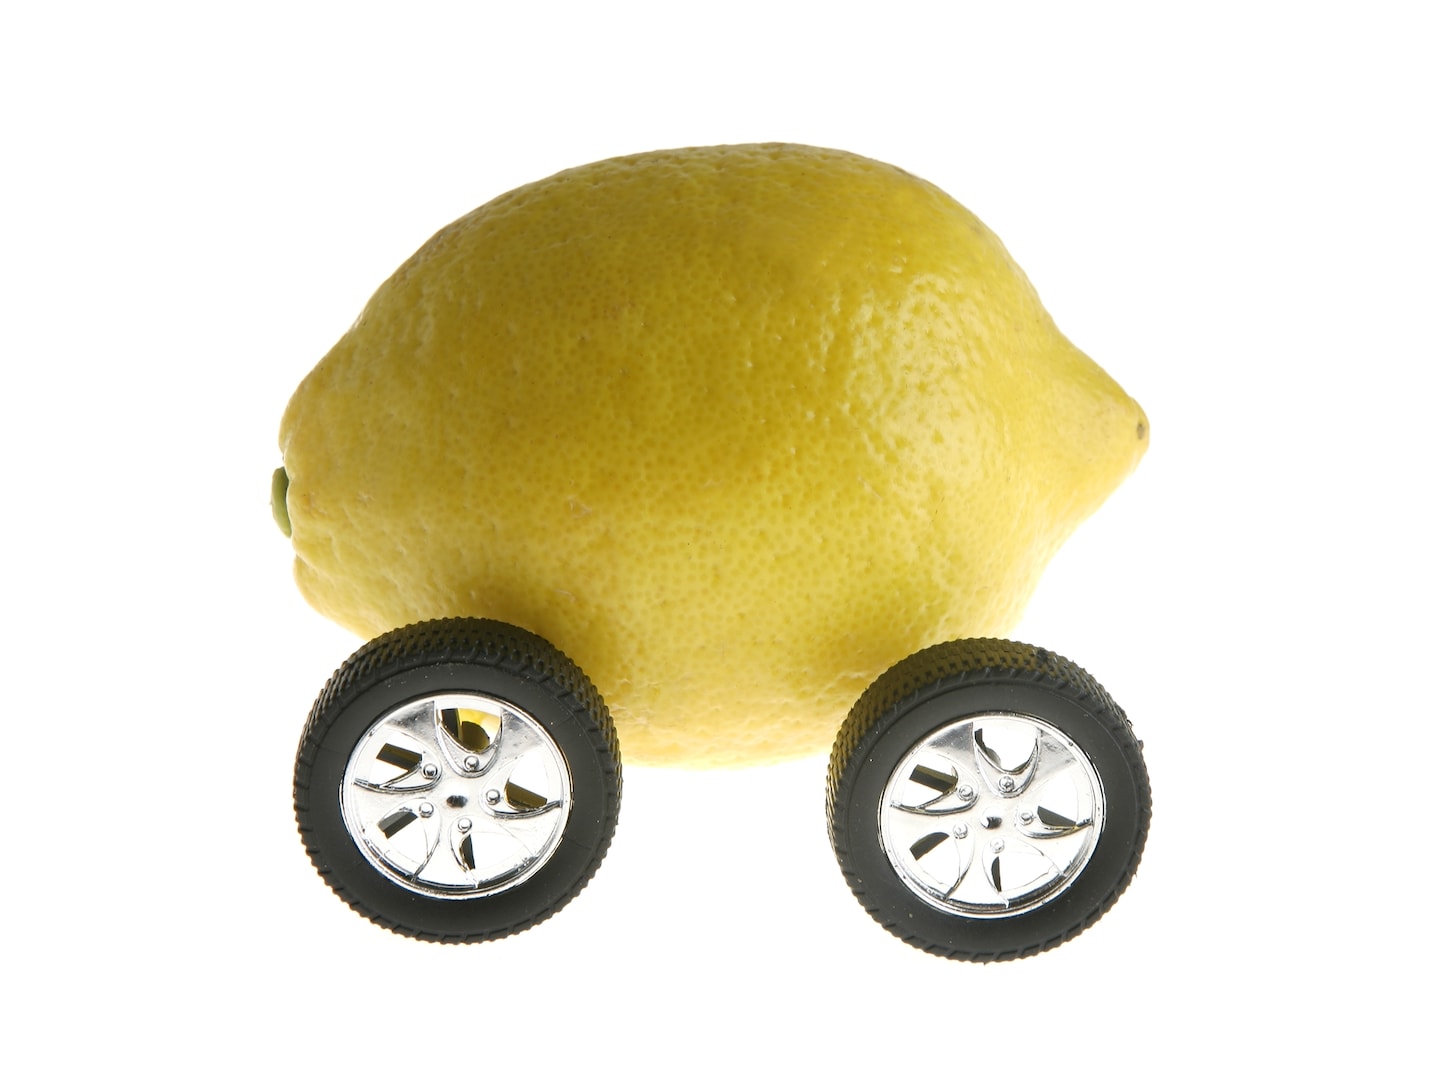 Ecological transport metaphor lemon and wheels